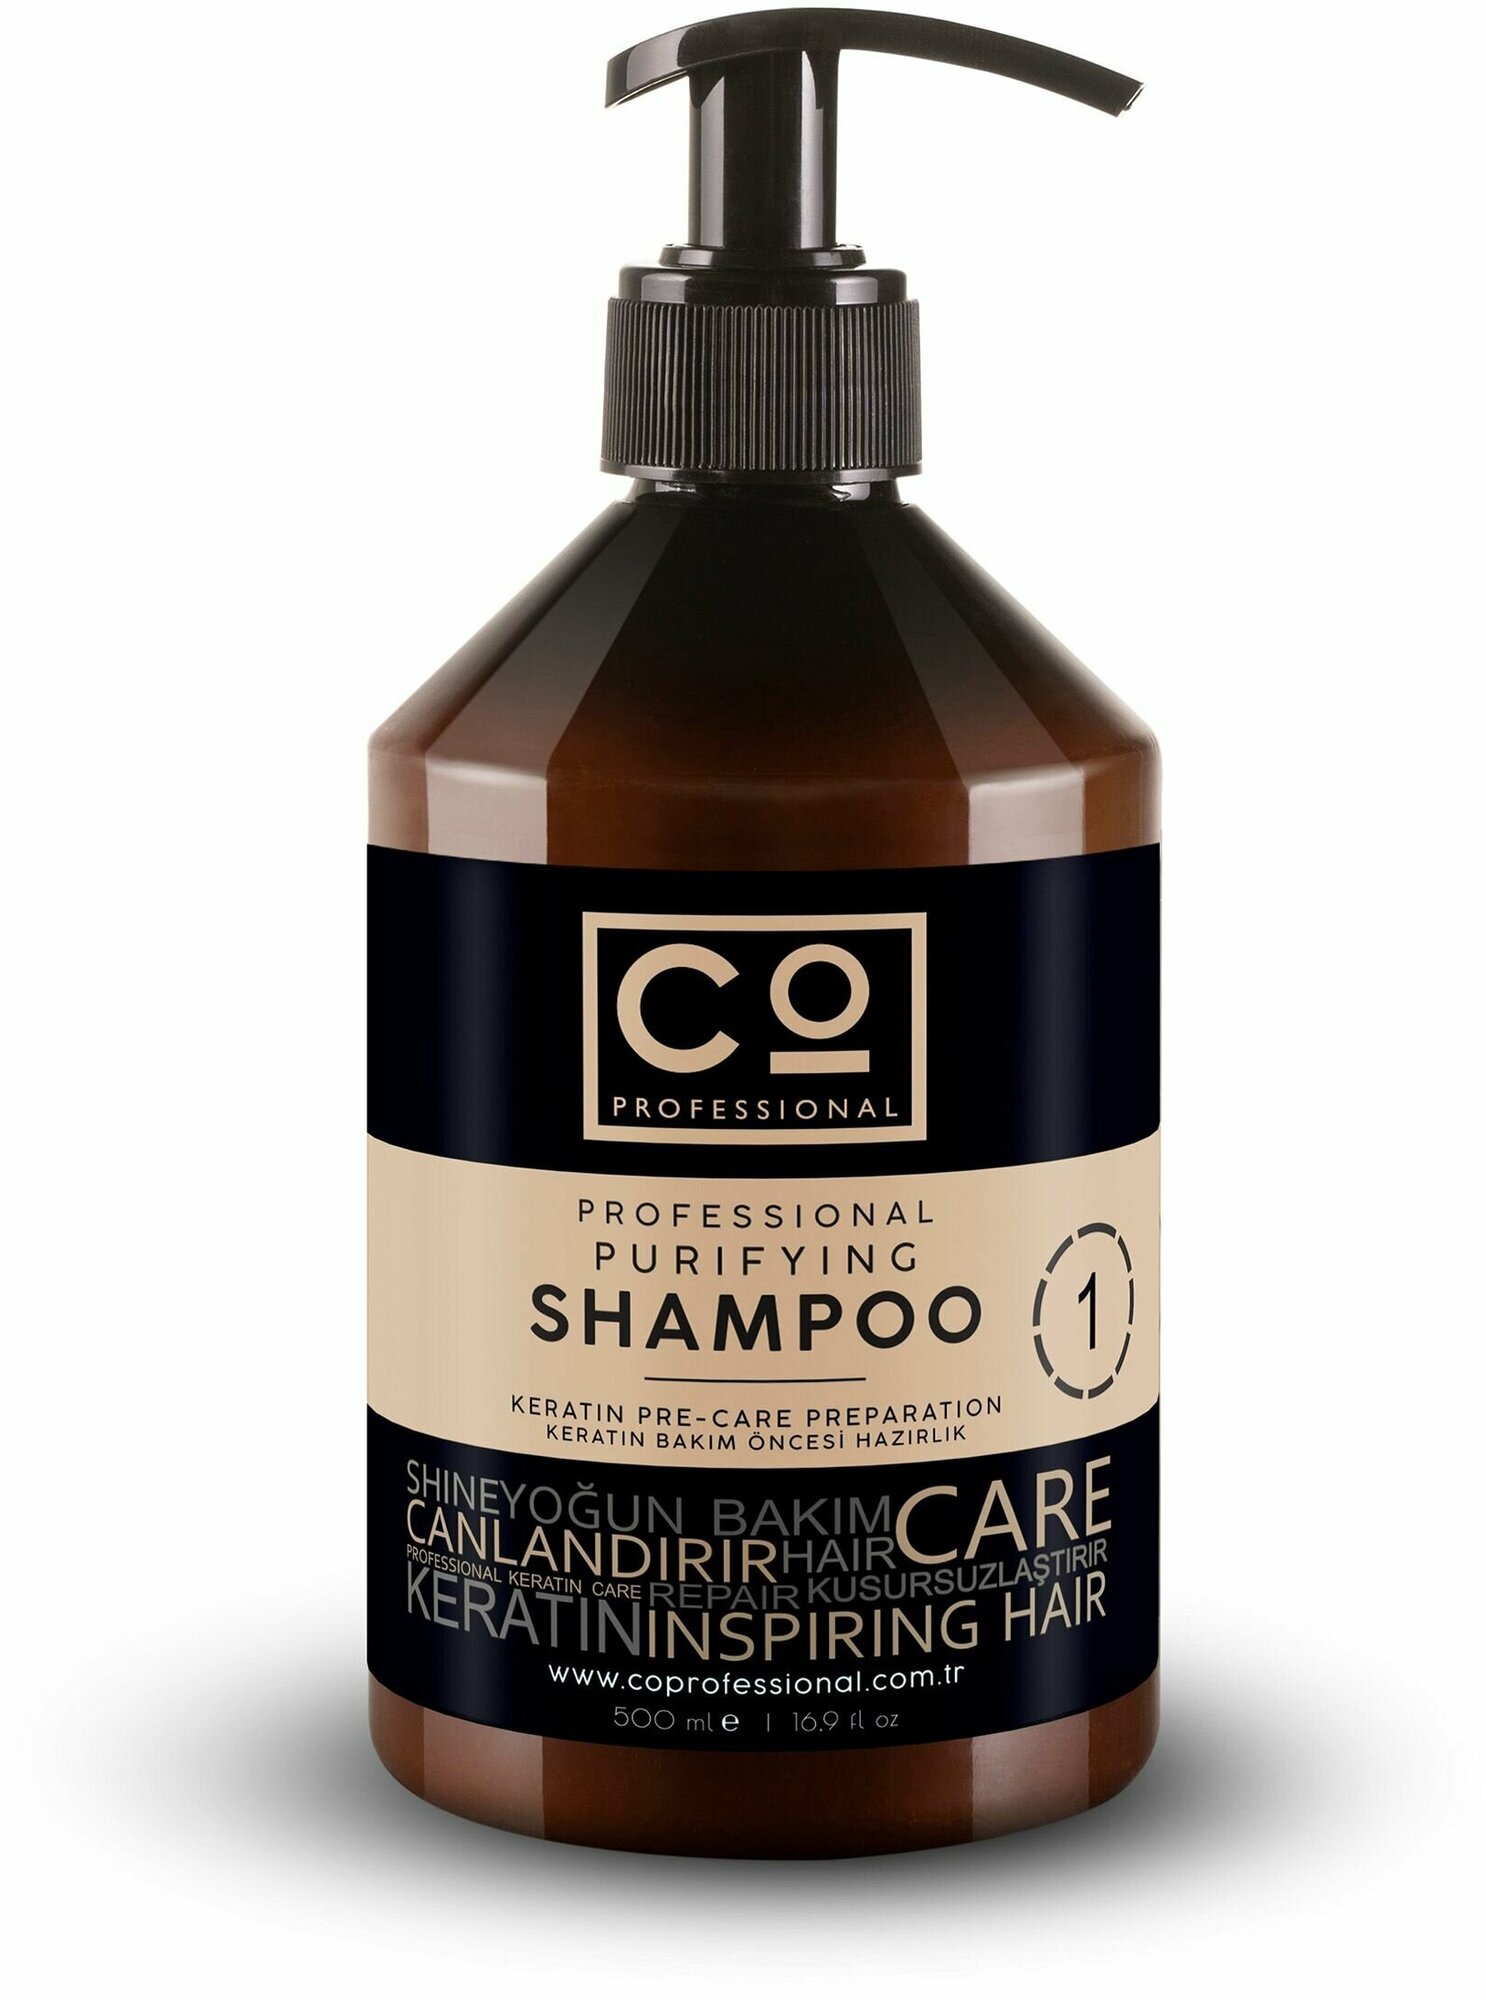 Шампунь глубокой очистки CO PROFESSIONAL Purifying Shampoo, 500 мл